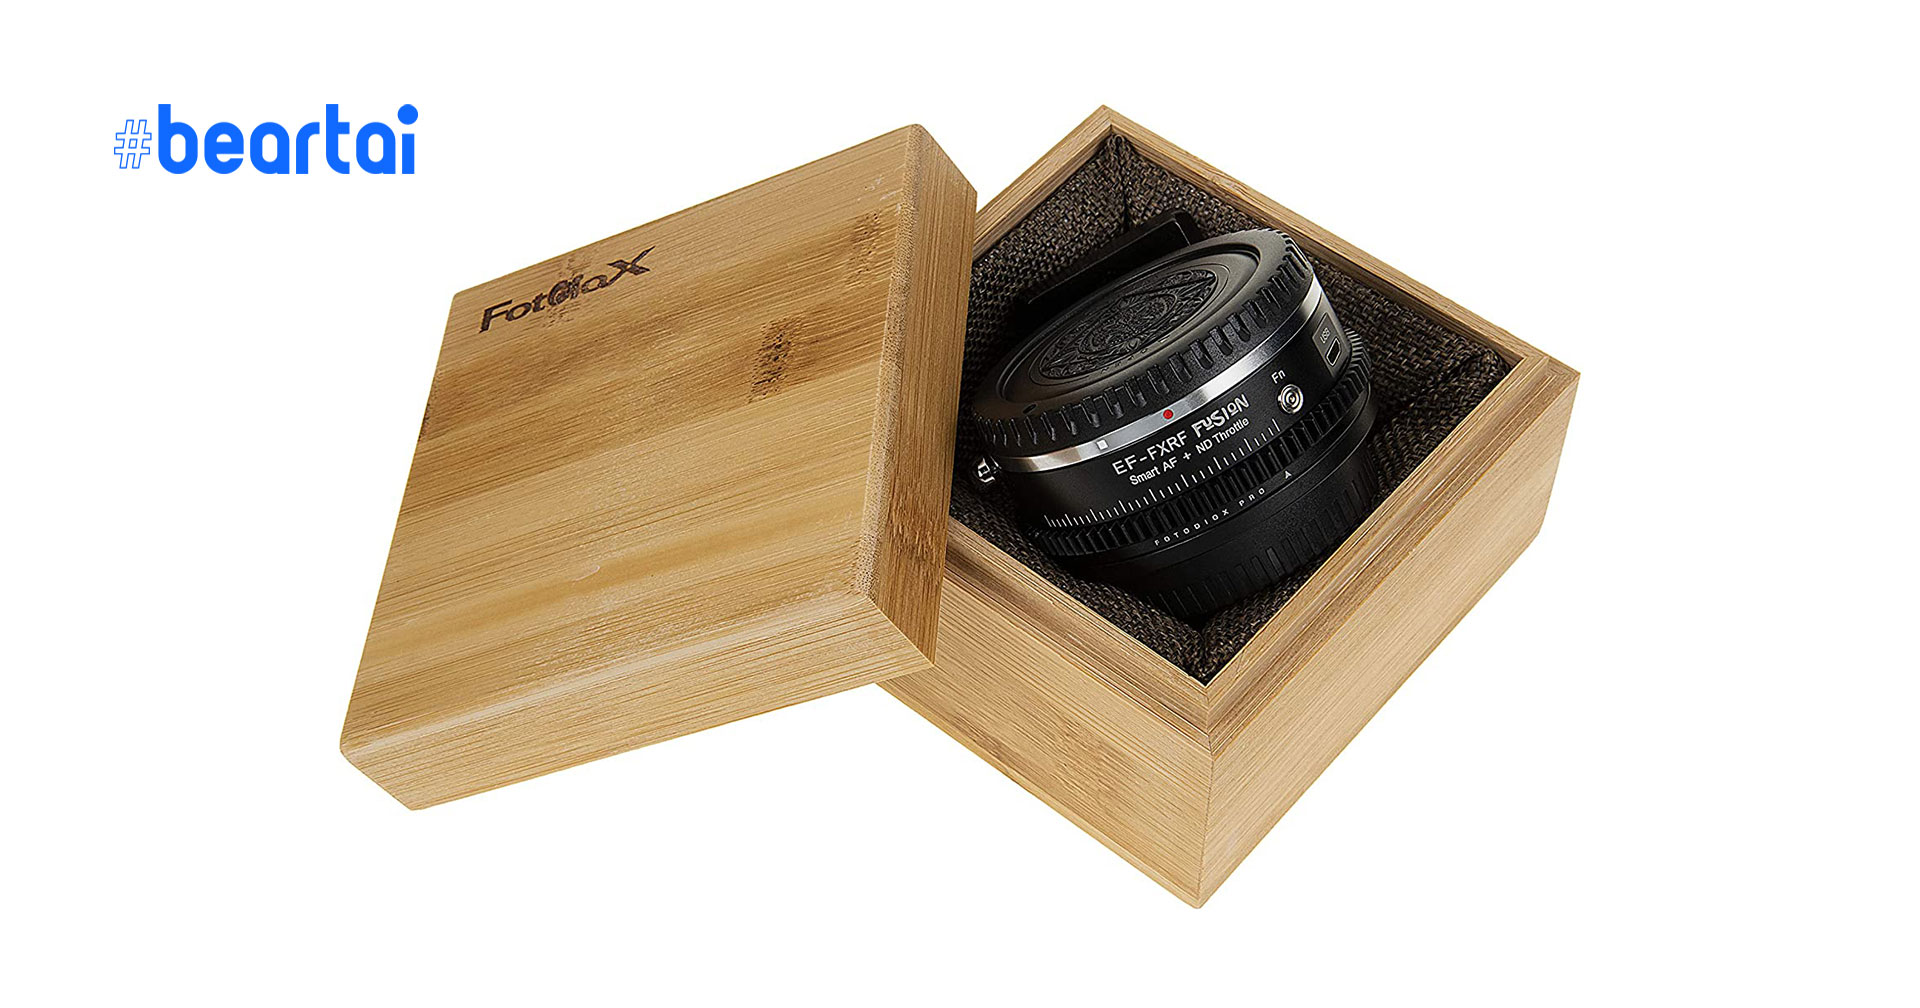 Fotodiox เปิดตัว ND Throttle Fusion smart AF Adapter แปลงเลนส์ Canon EF ไป Fuji X-mount พร้อม ND filter ในตัว